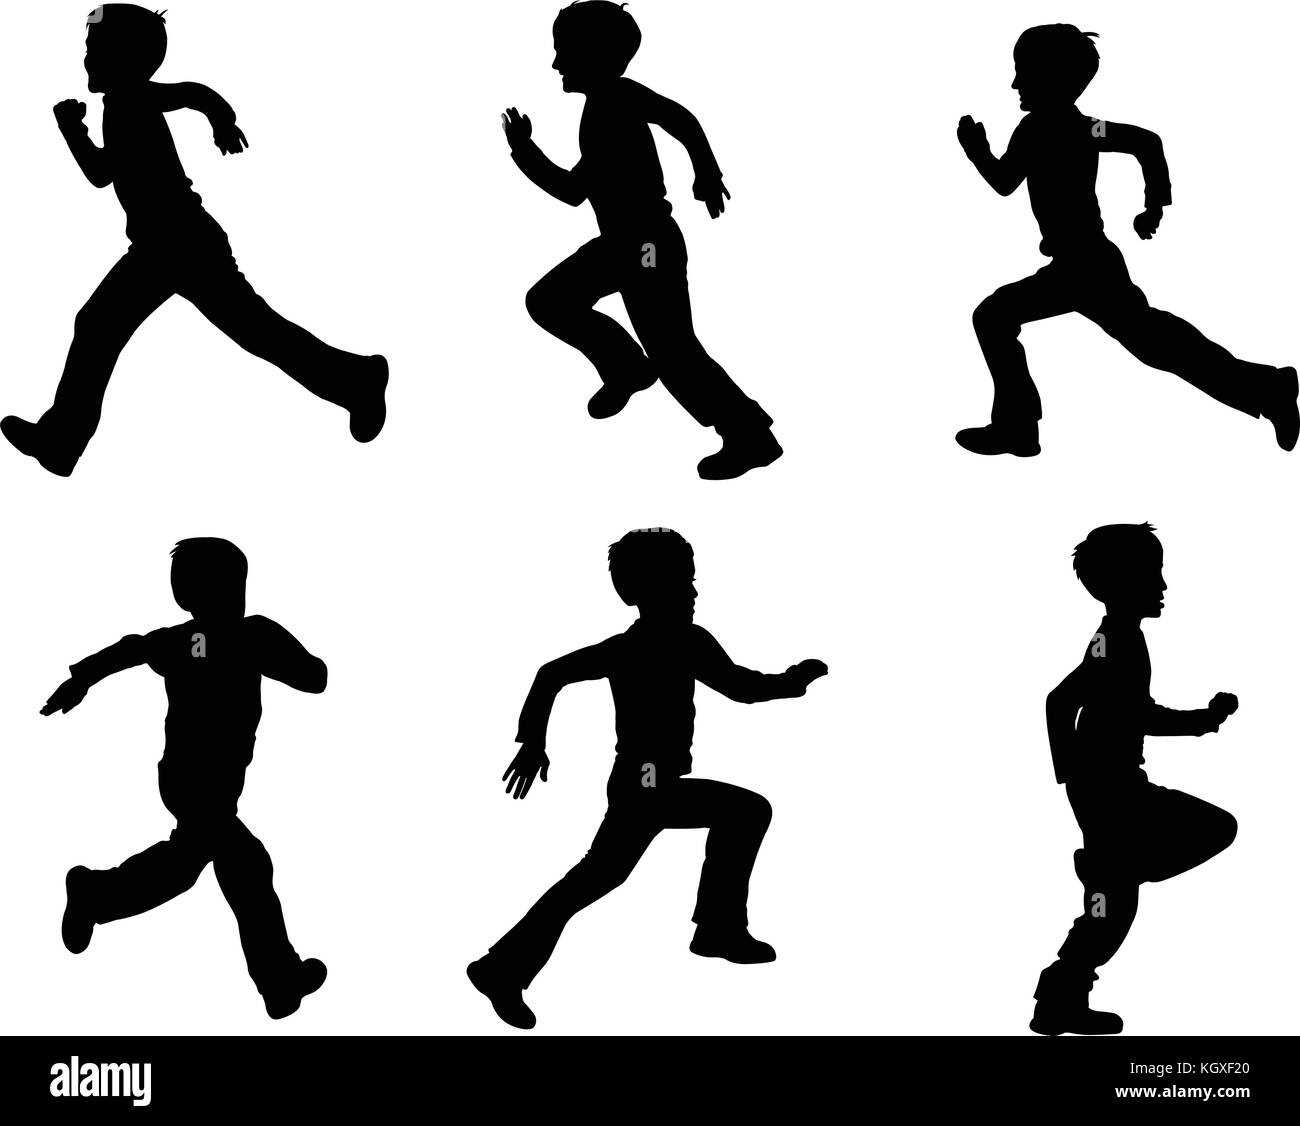 kid running silhouettes - vector Stock Vector